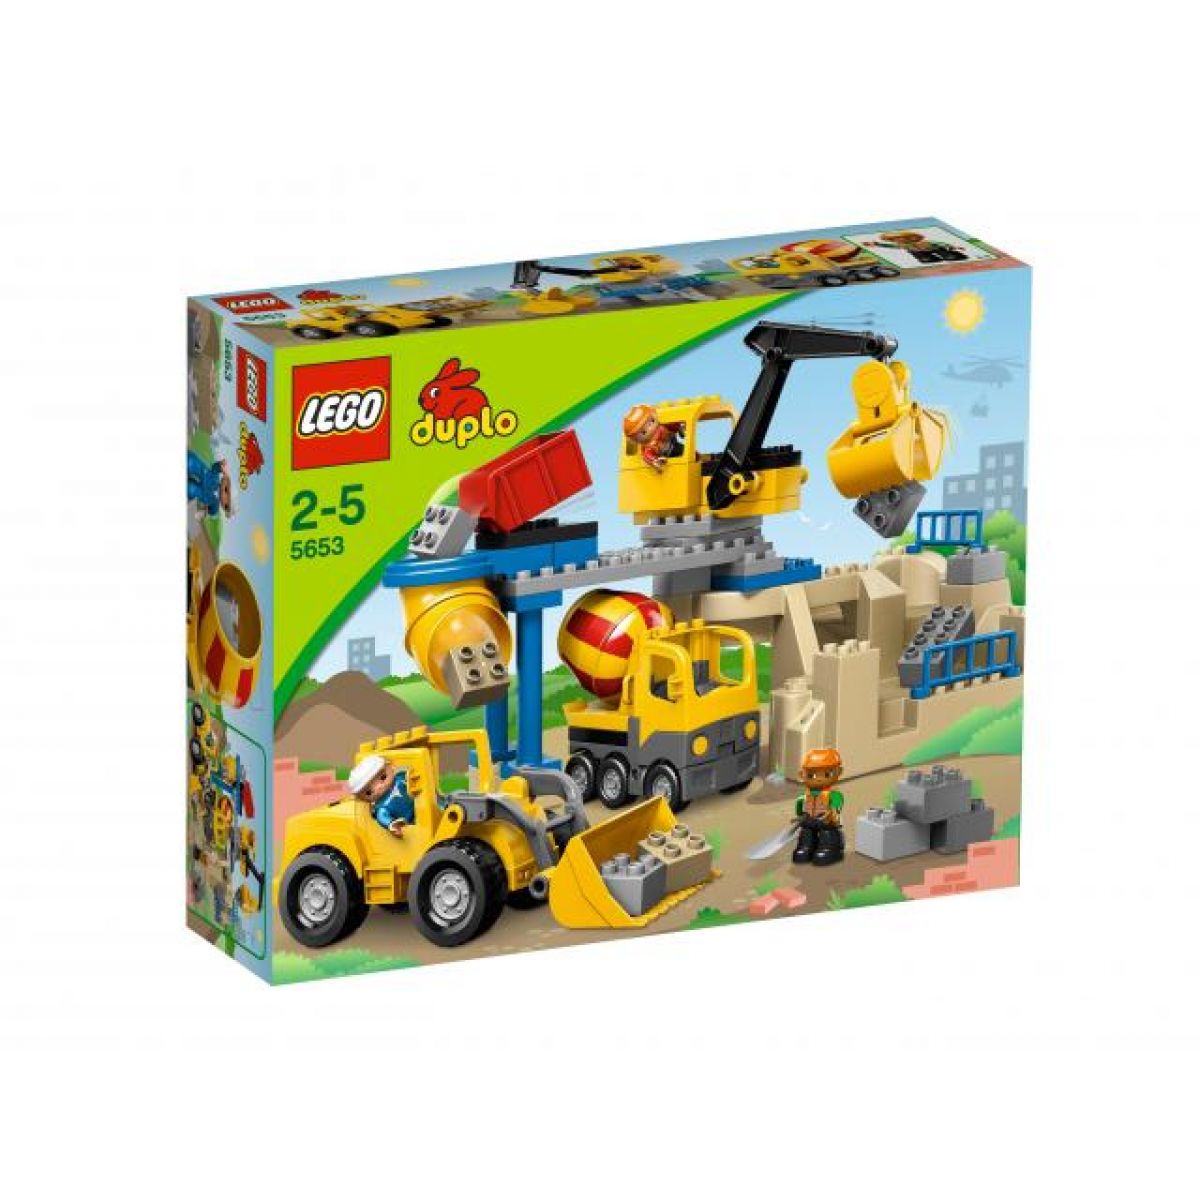 LEGO DUPLO 5653 Kamenolom